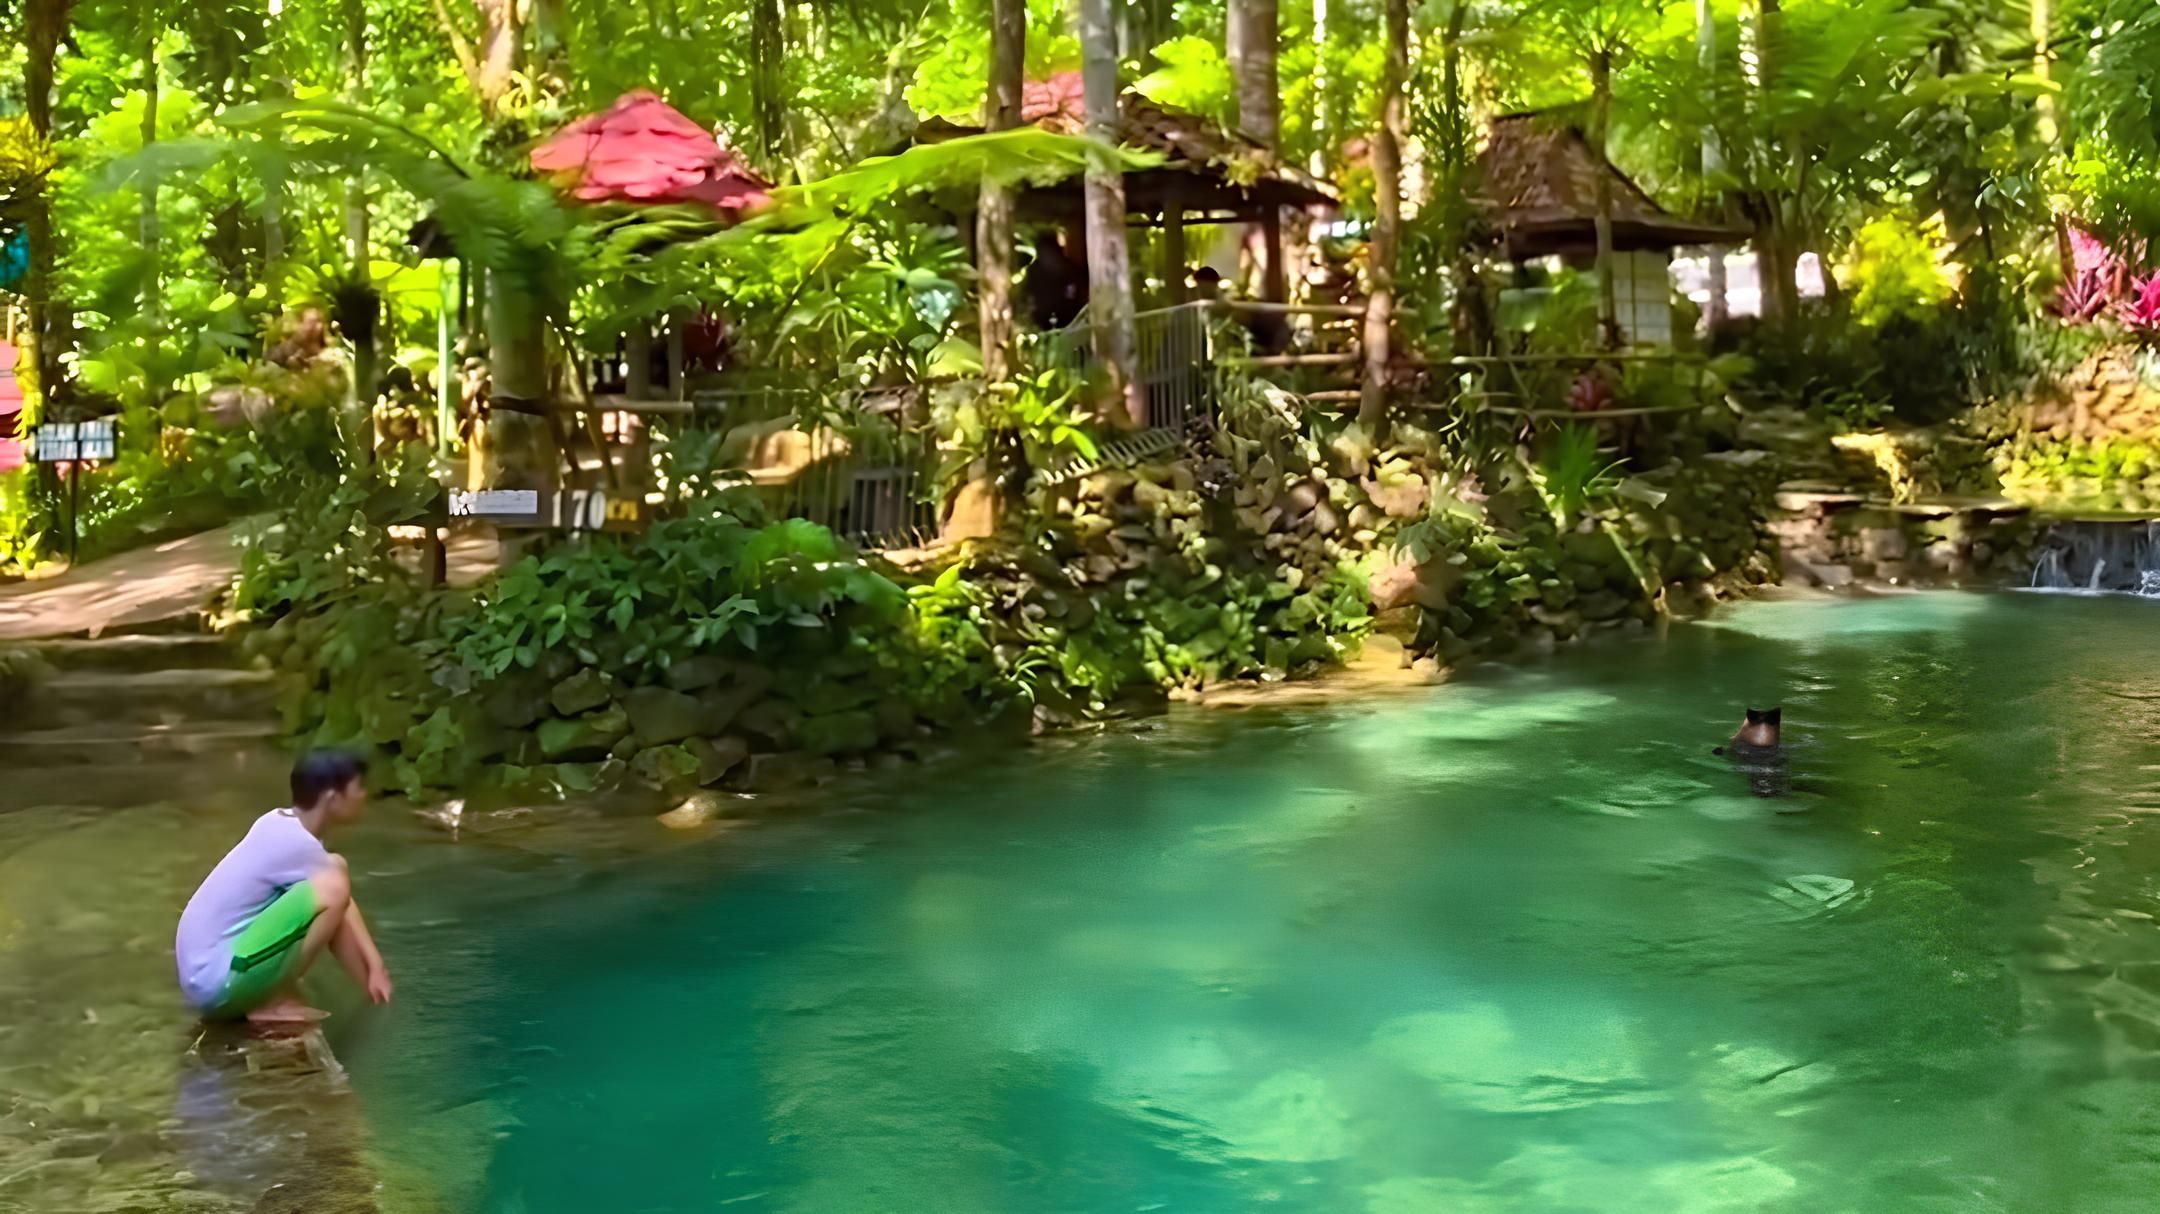 Wisata Sungai Mudal Kulonprogo Jogja memiliki air alami yang menyegarkan dengan air yang jernih.